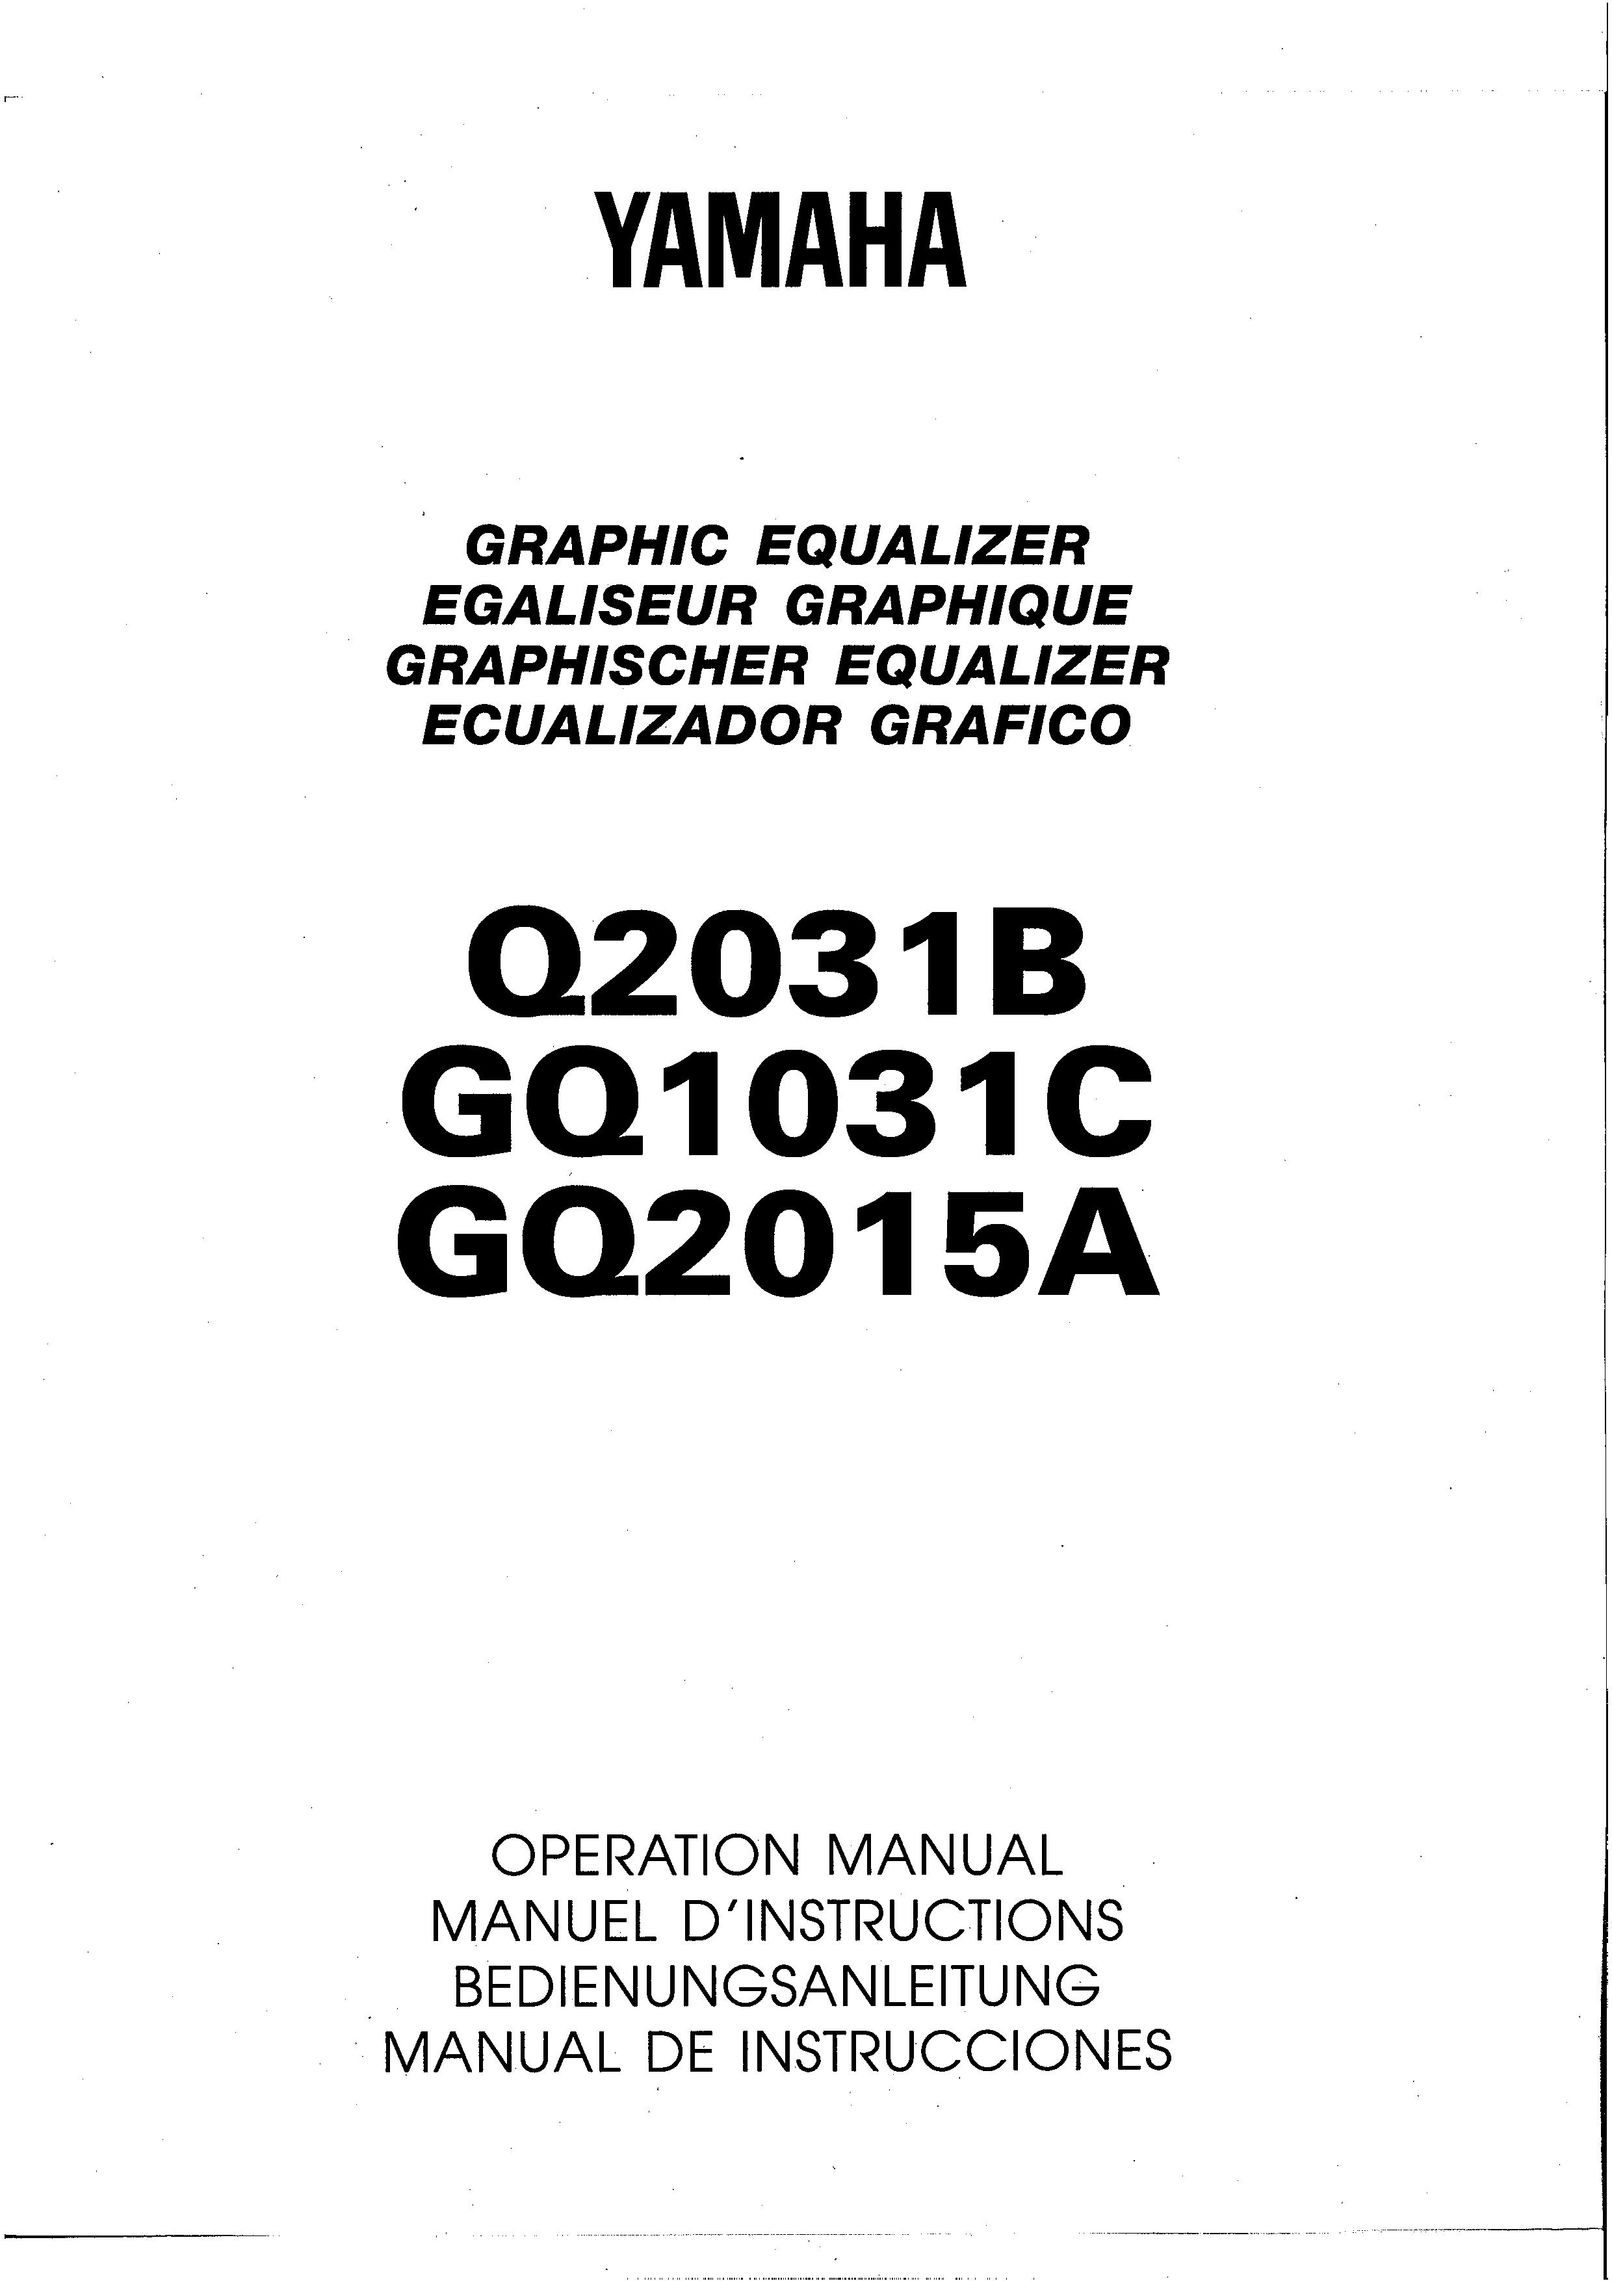 Yamaha GQ1031C Stereo Equalizer User Manual